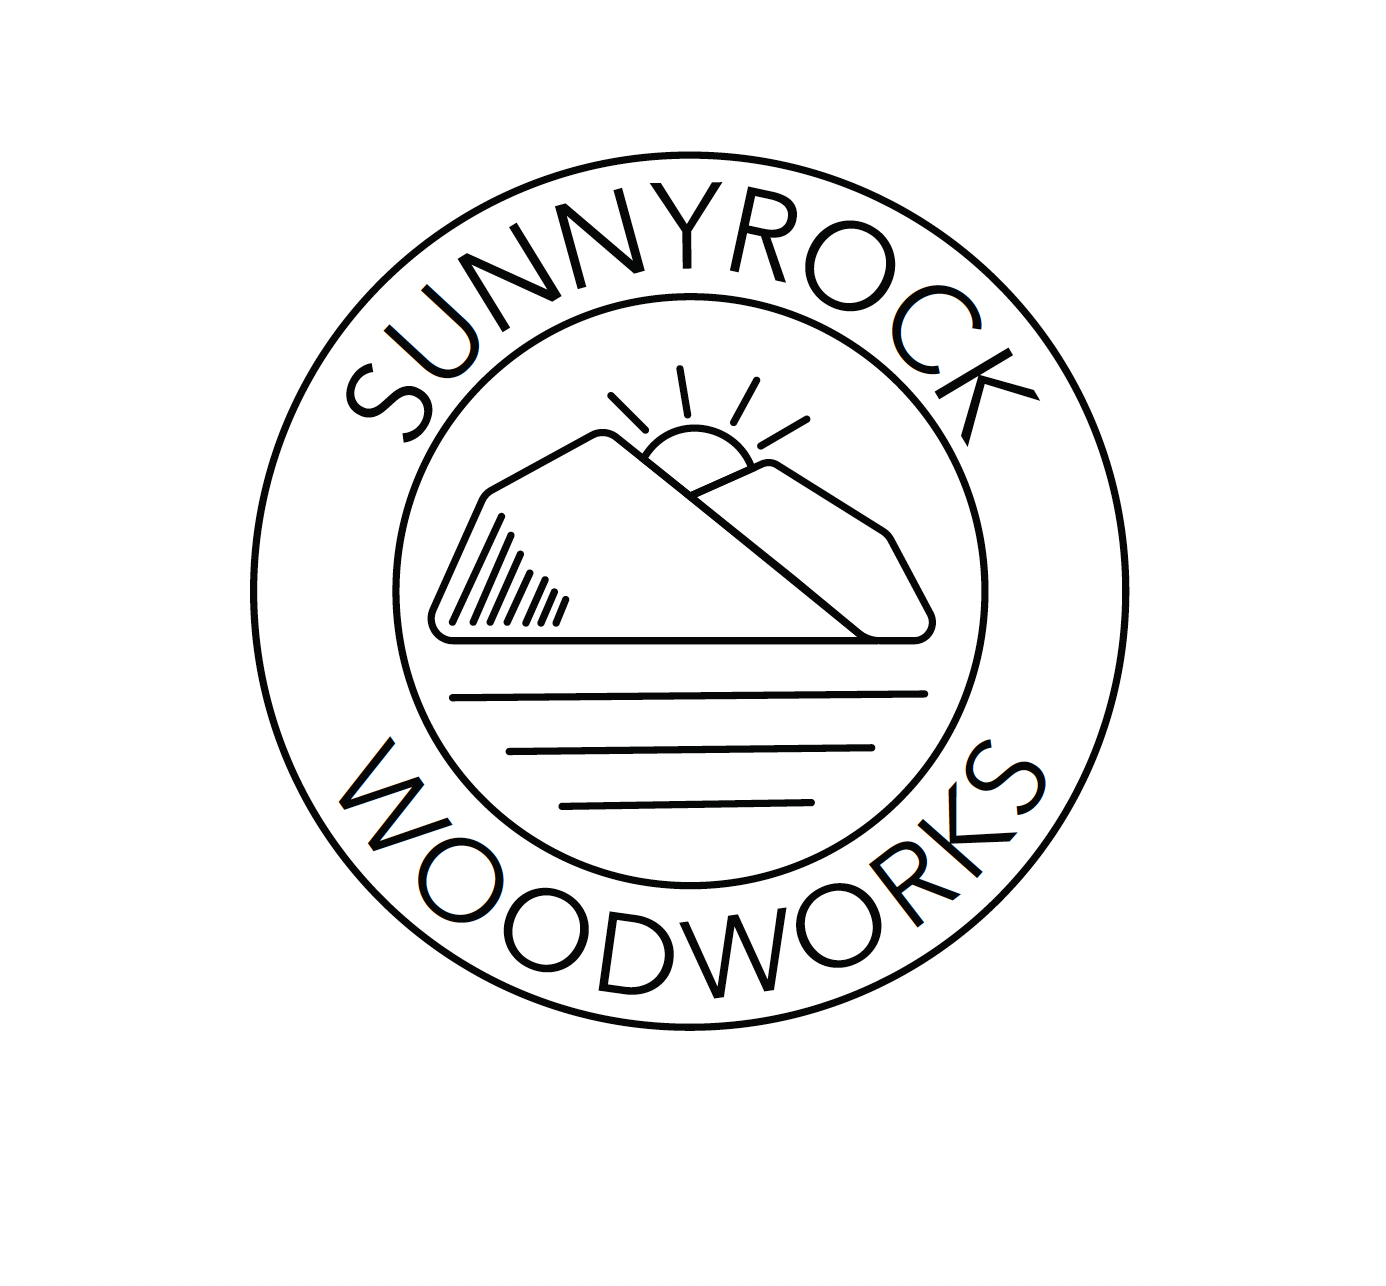 SUNNYROCK WOODWORKS